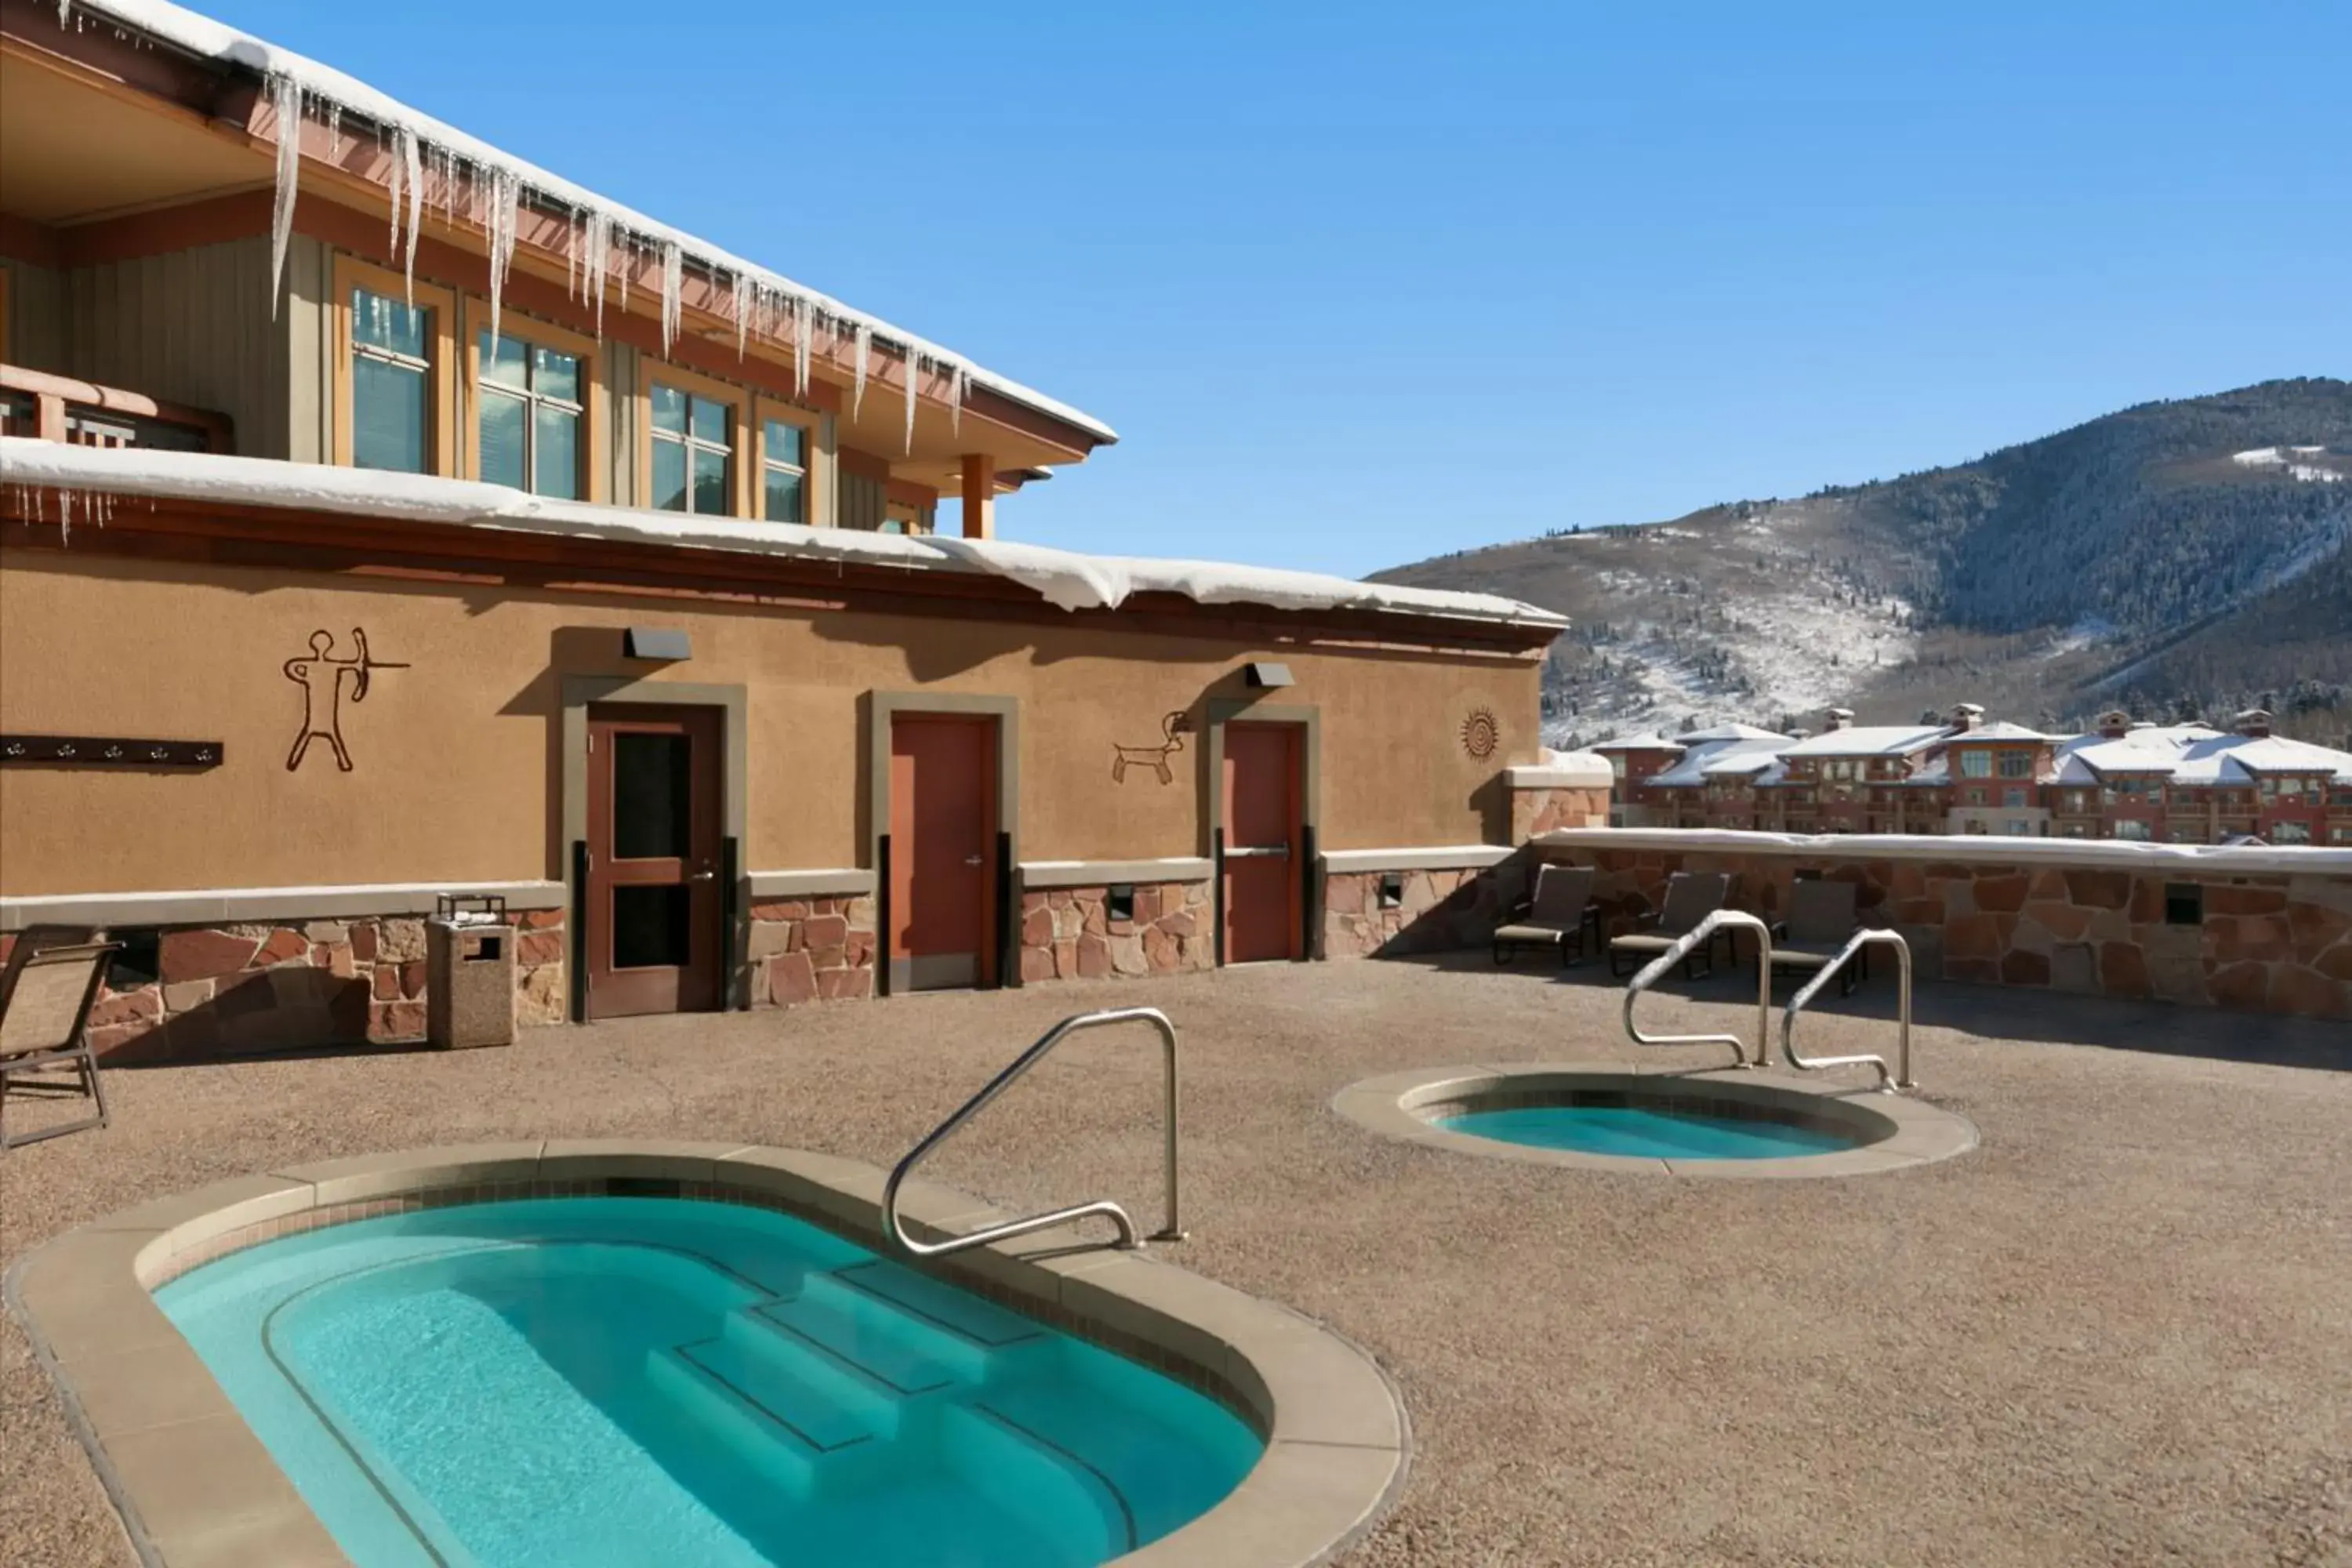 Hot Tub, Swimming Pool in Sundial Lodge by All Seasons Resort Lodging